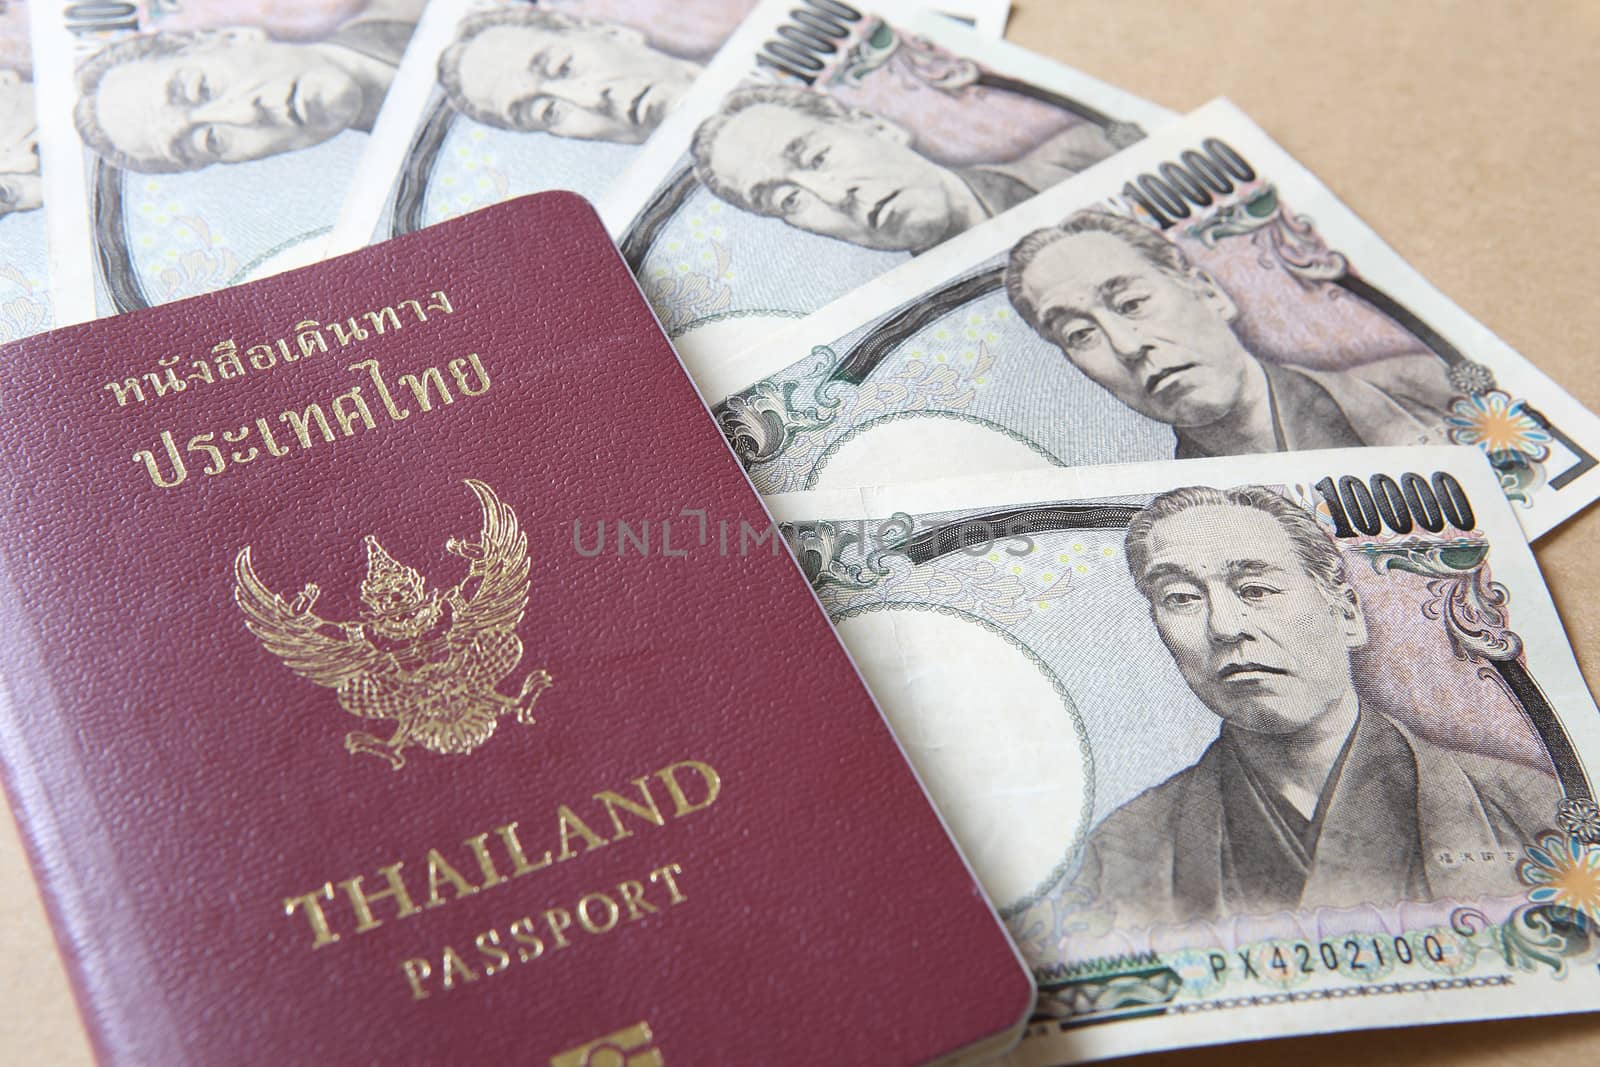 Thailand passport and Japanese Yen money